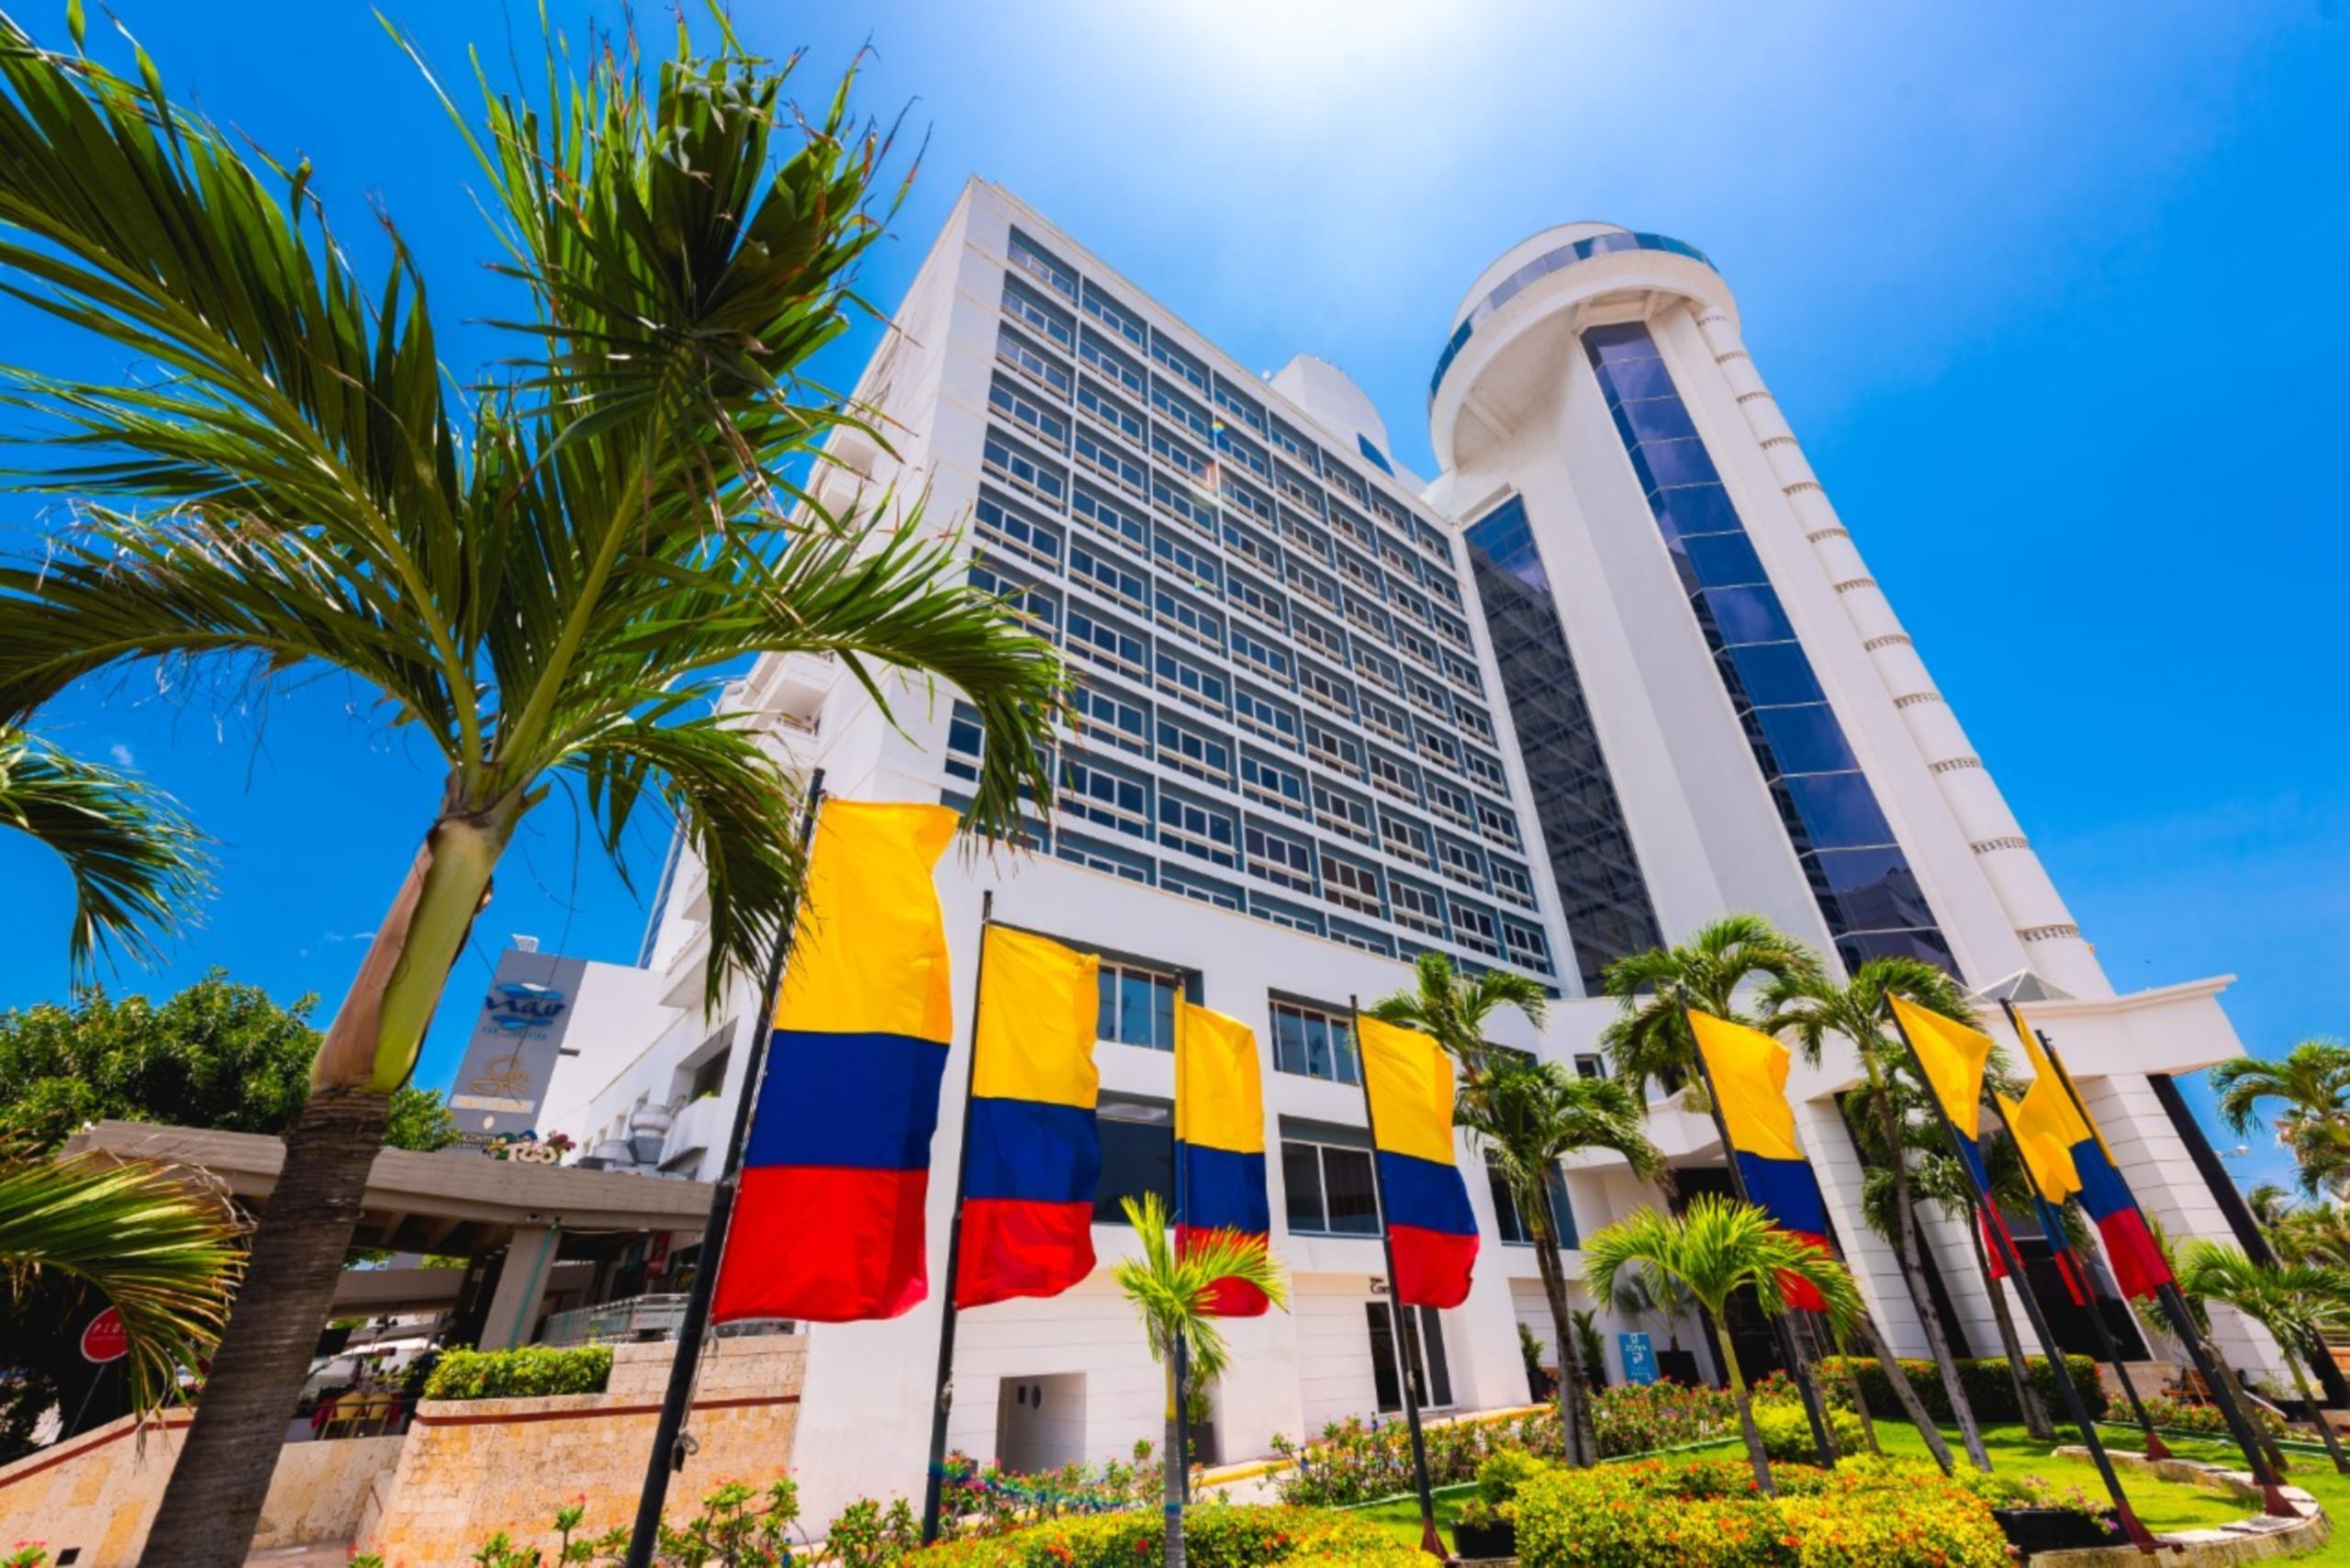 Hotel Almirante Cartagena Colombia Kültér fotó